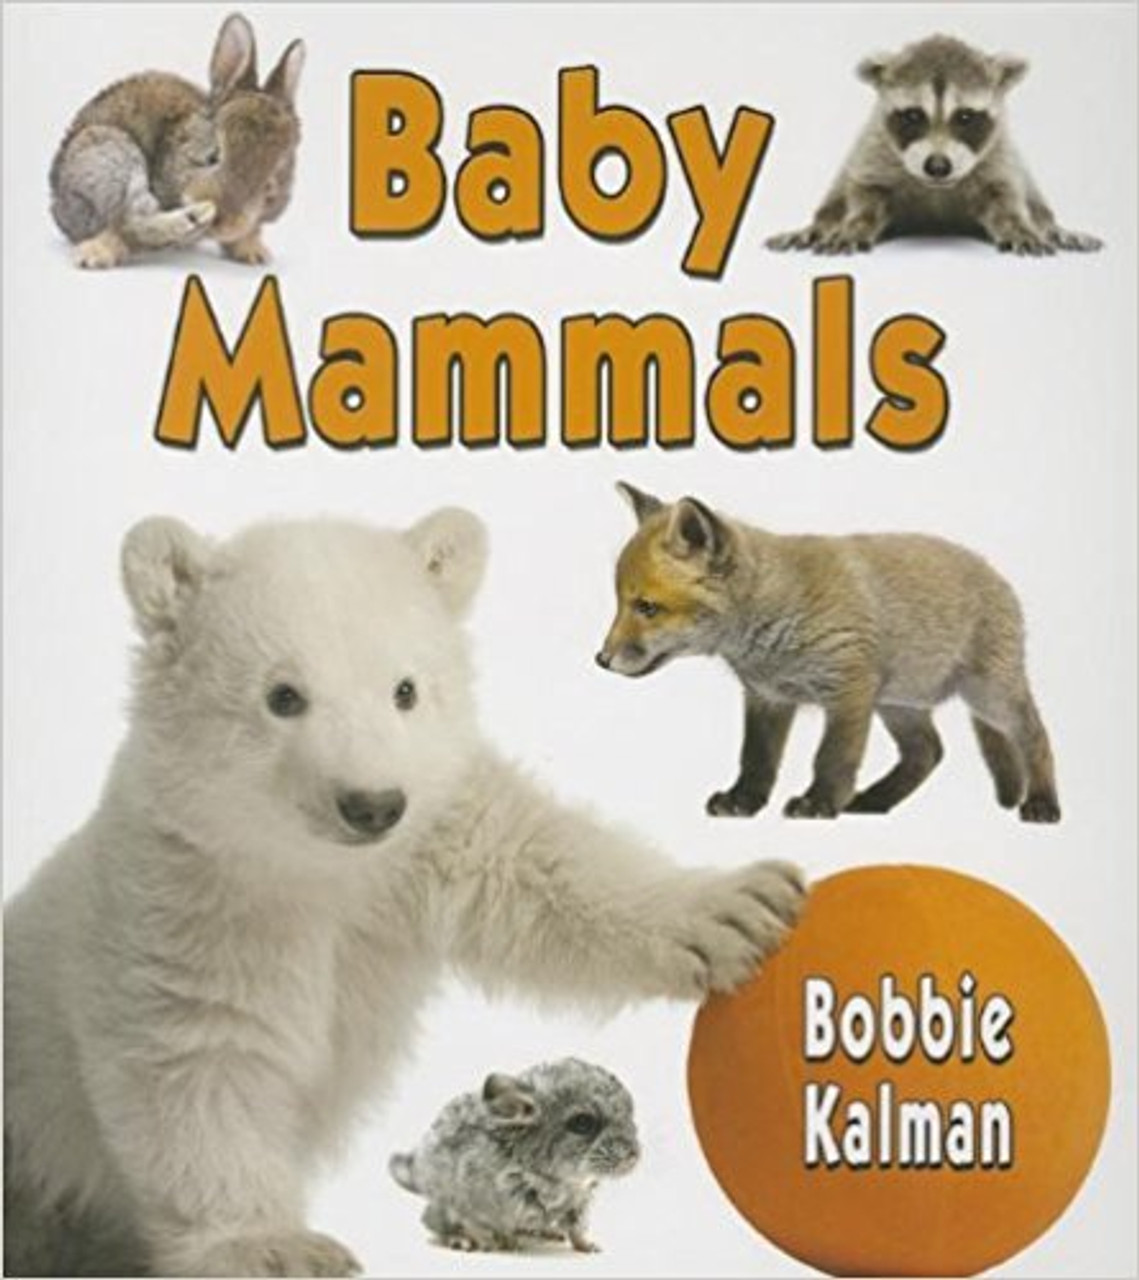 Baby Mammals (Paperback) by Bobbie Kalman